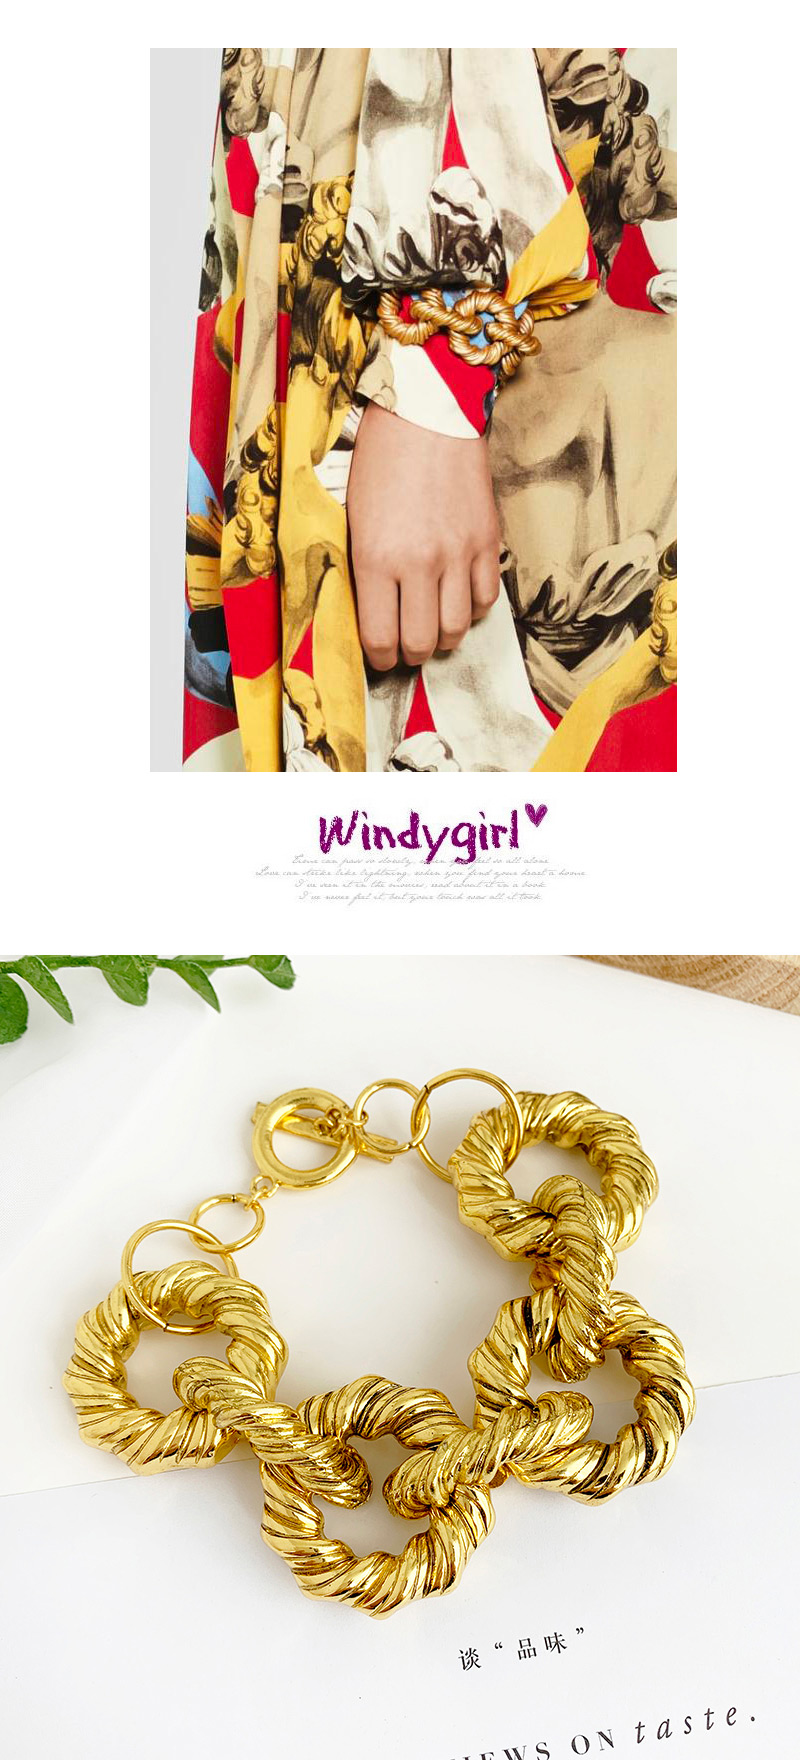  Gold Resin Chain Bracelet,Fashion Bracelets